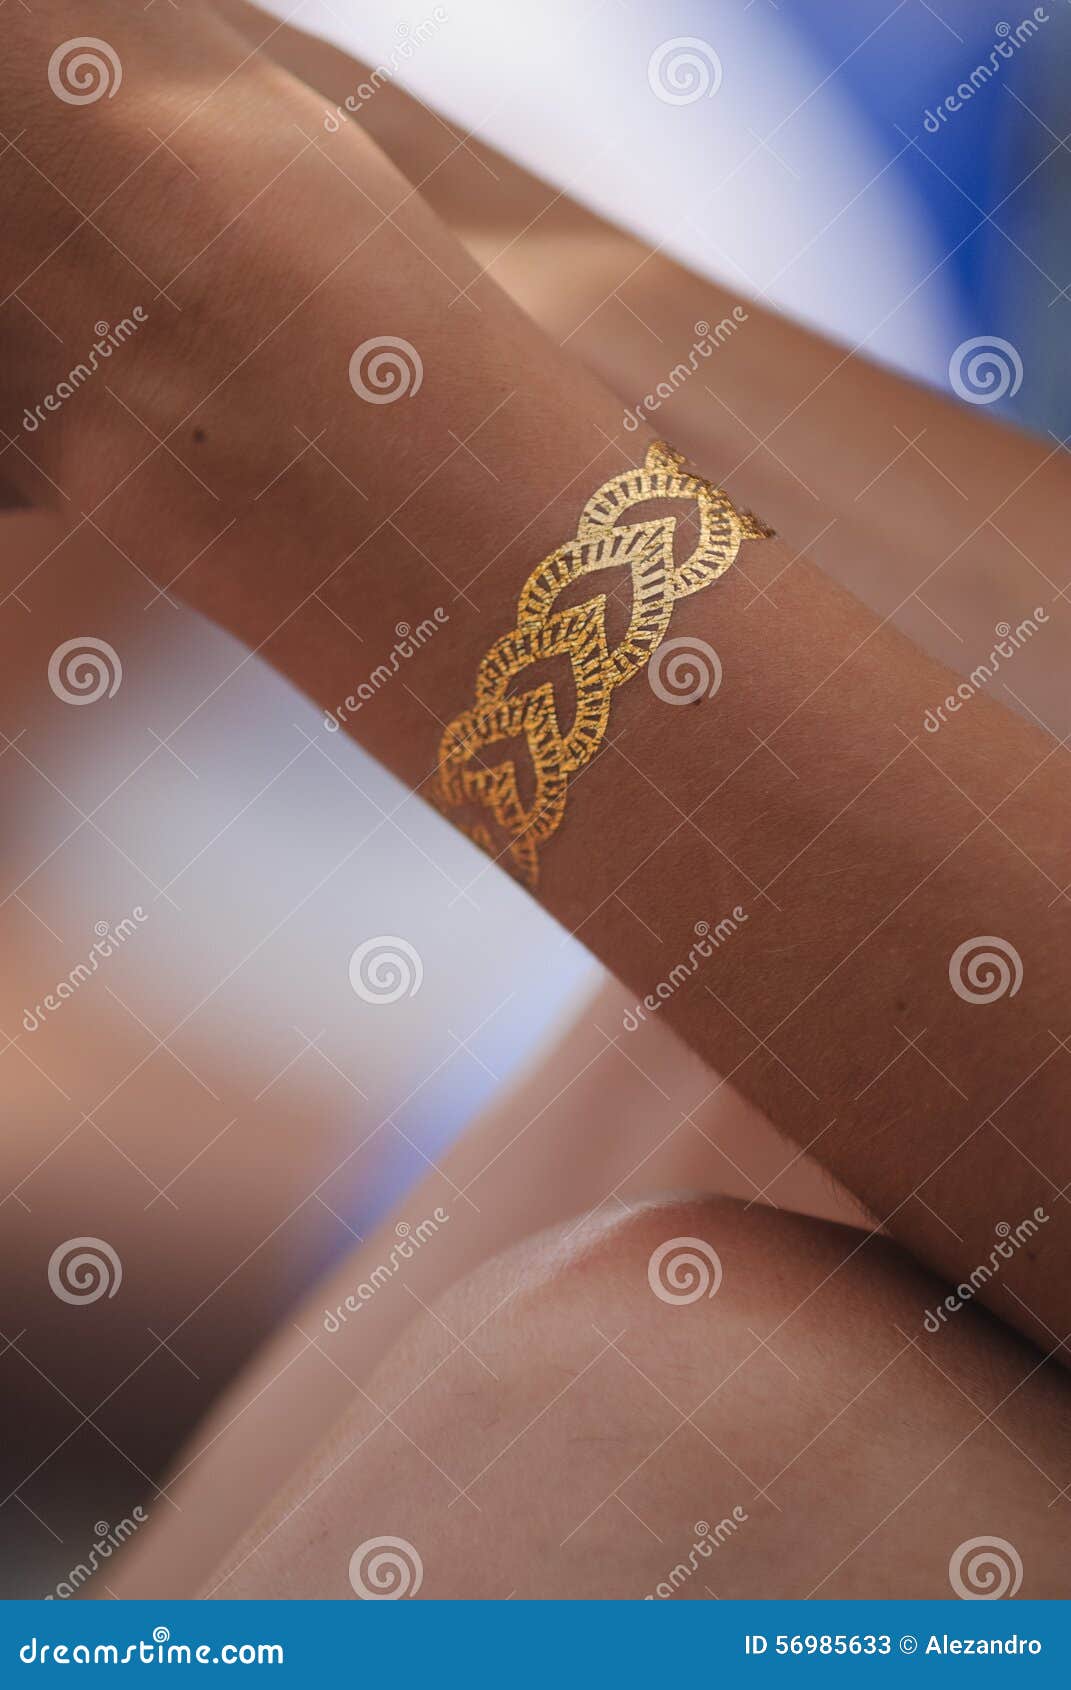 Temporary Flash Tattoo on a Woman S Wrist Stock Image - Image of fashion,  bohemia: 56985633